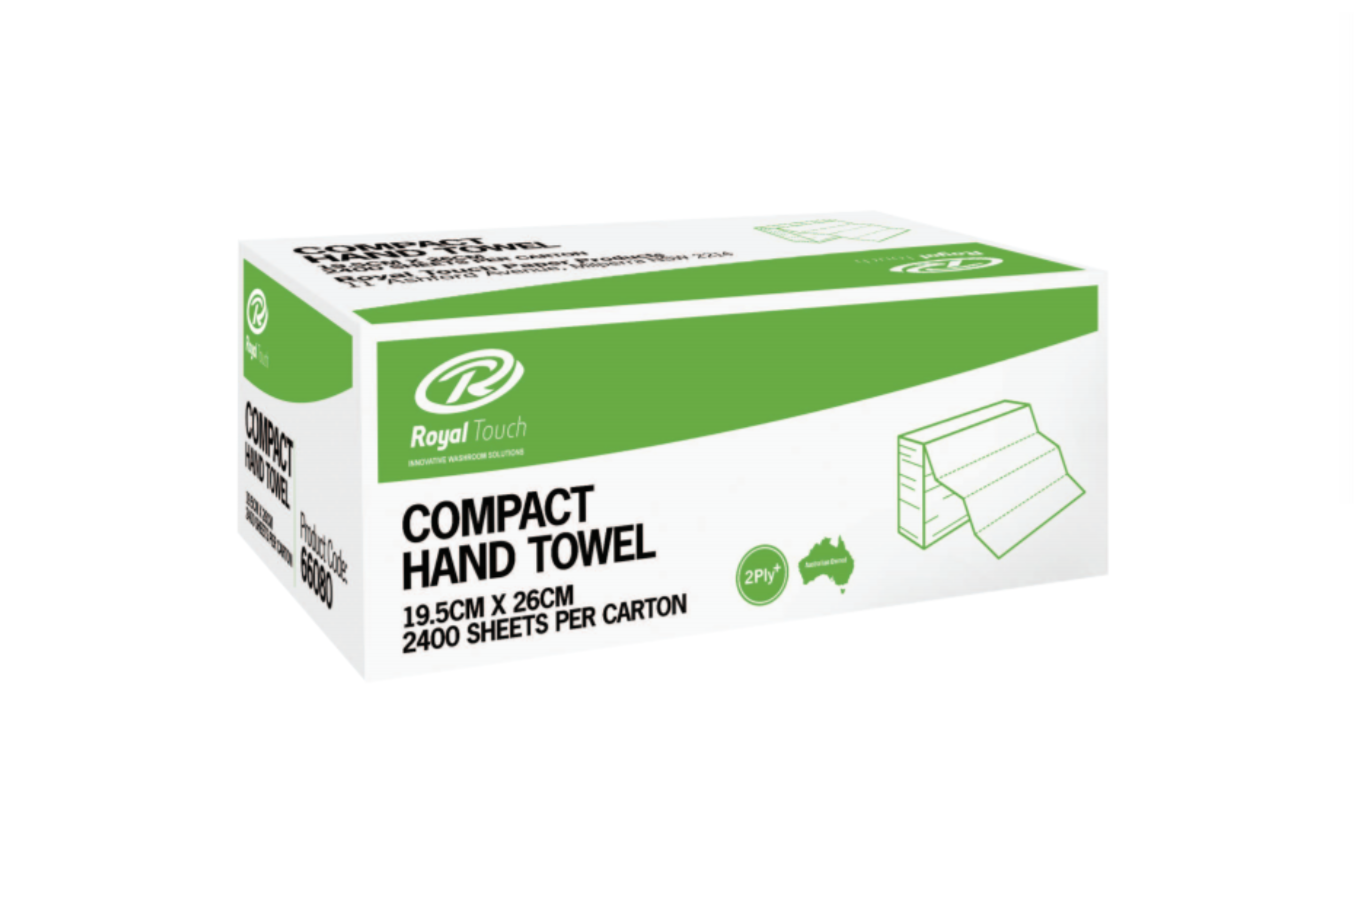 Compact Hand Towel 19.5cm x 26cm.